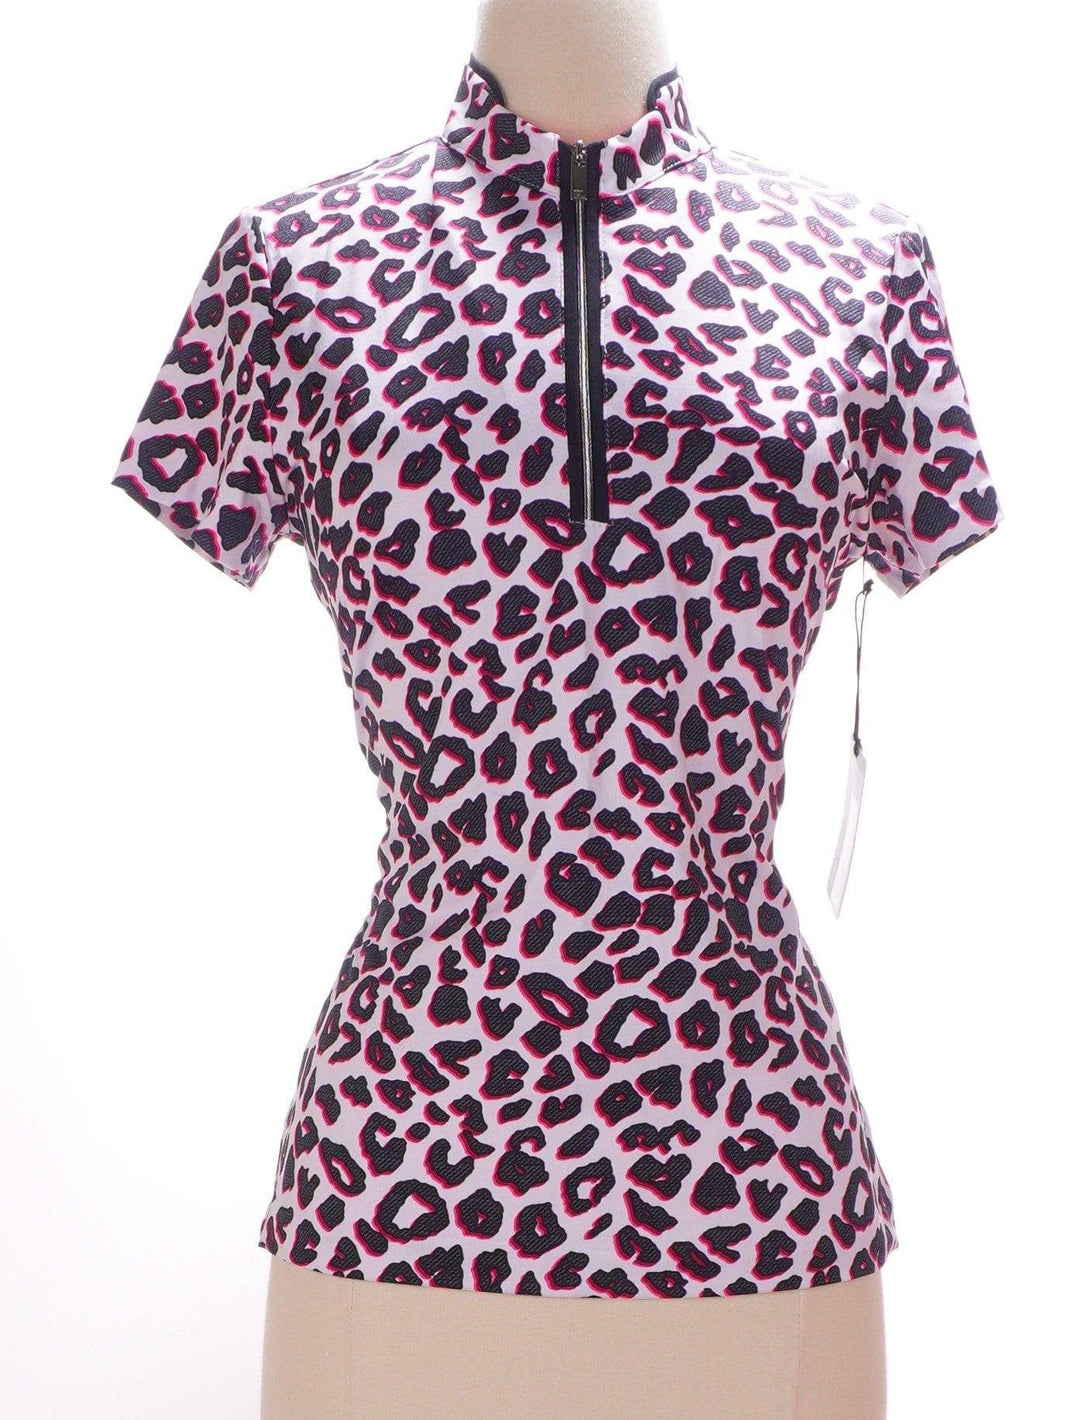 Tail Animal Print / Small Tail  Short Sleeve Top - Joli Cheetah - Size Small